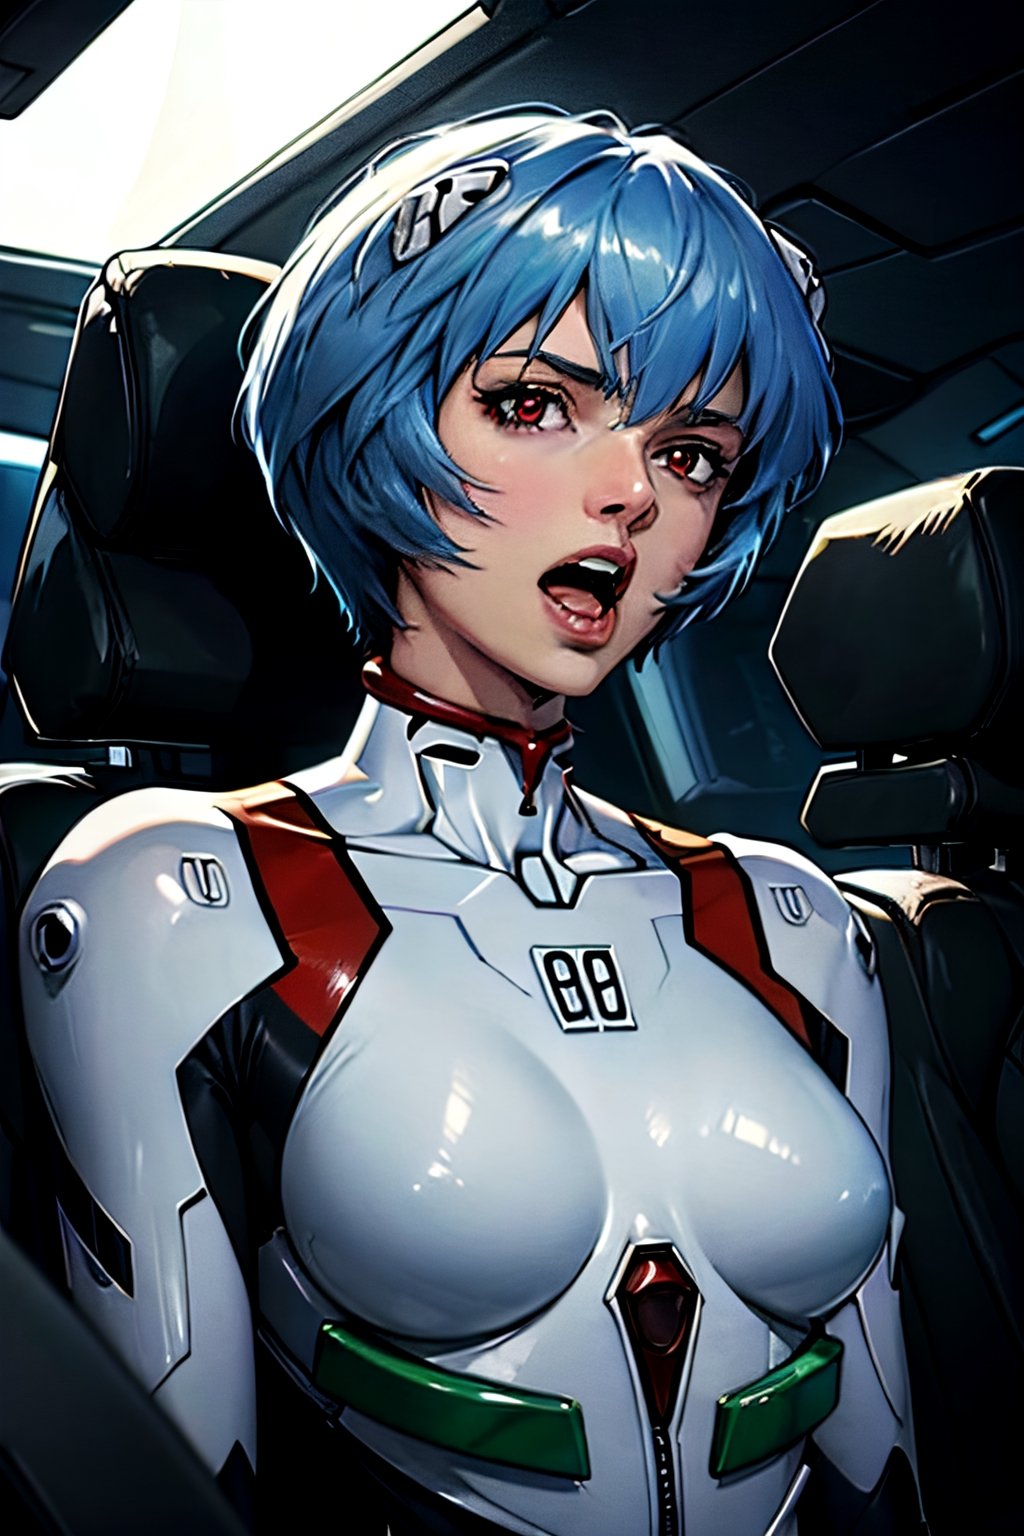 Neon Genesis Evangelion's Rei Ayanami, facial portrait, sexy stare, screaming, inside robot cockpit, fighting aliens, ,rei ayanami